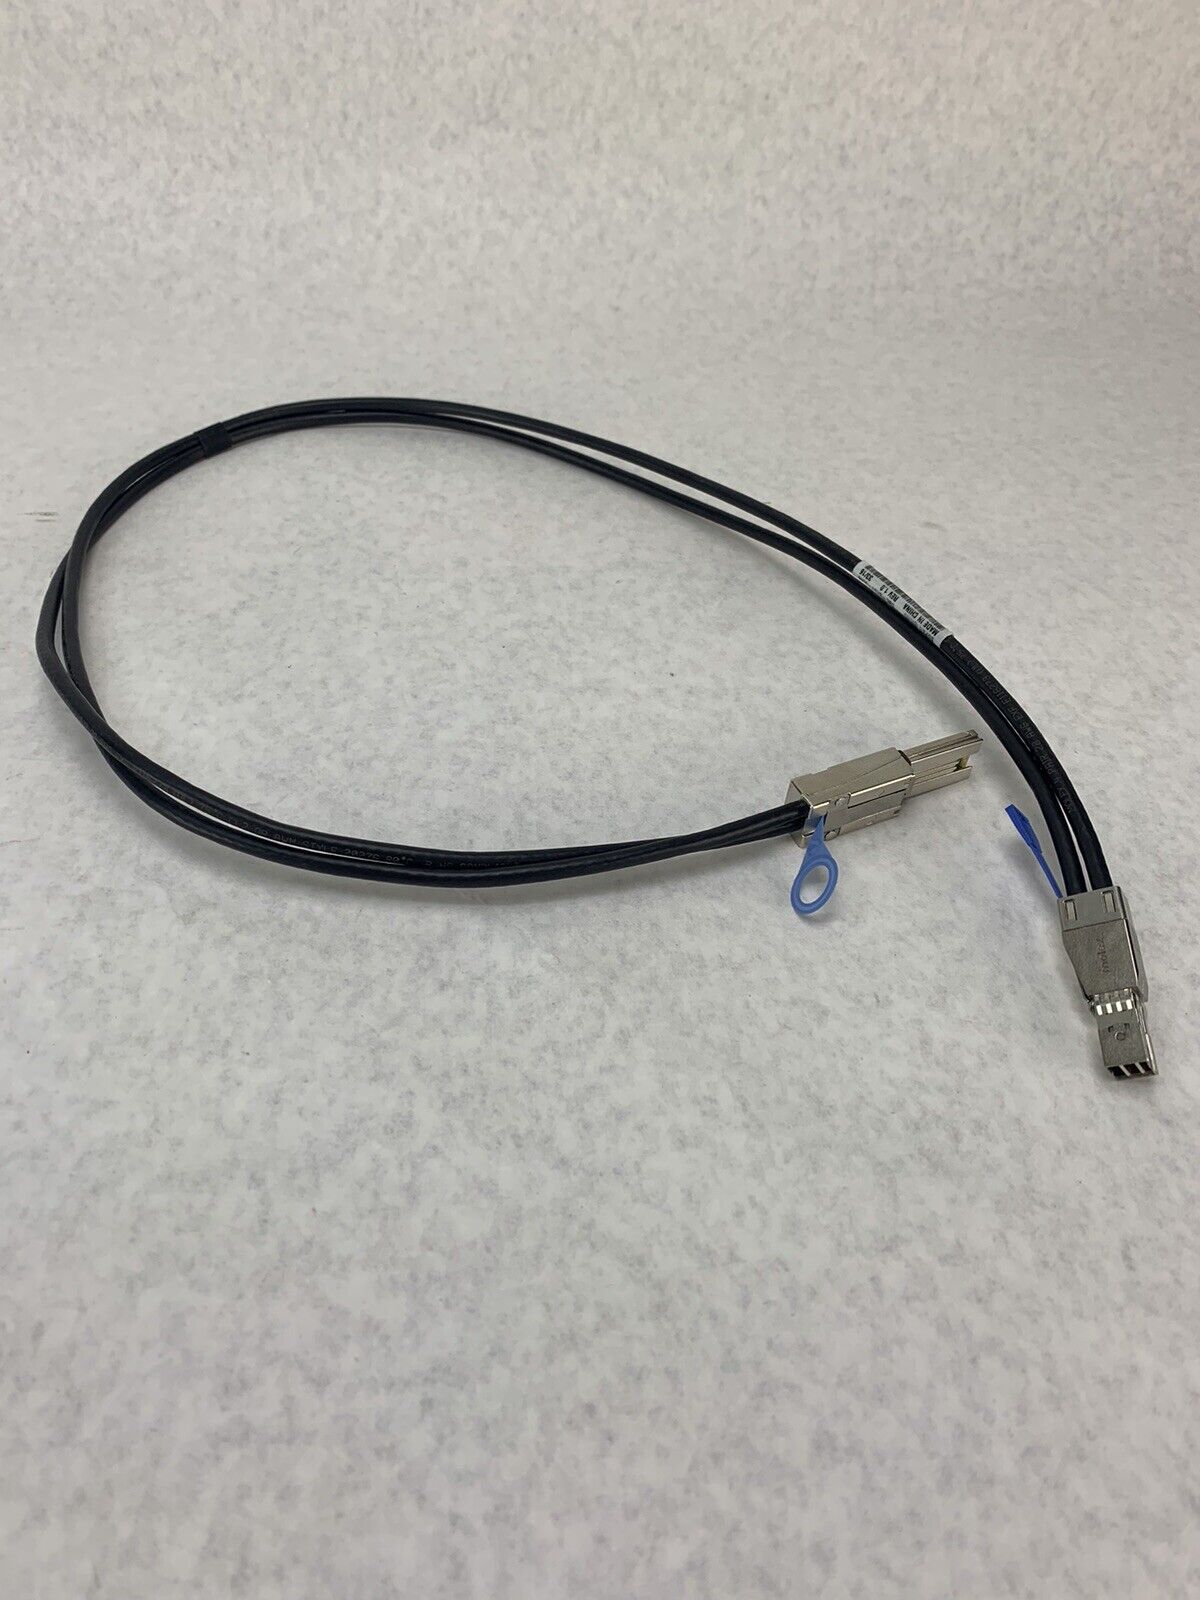 Molex Supermicro CBL-SAST-0548 Mini SAS Cable